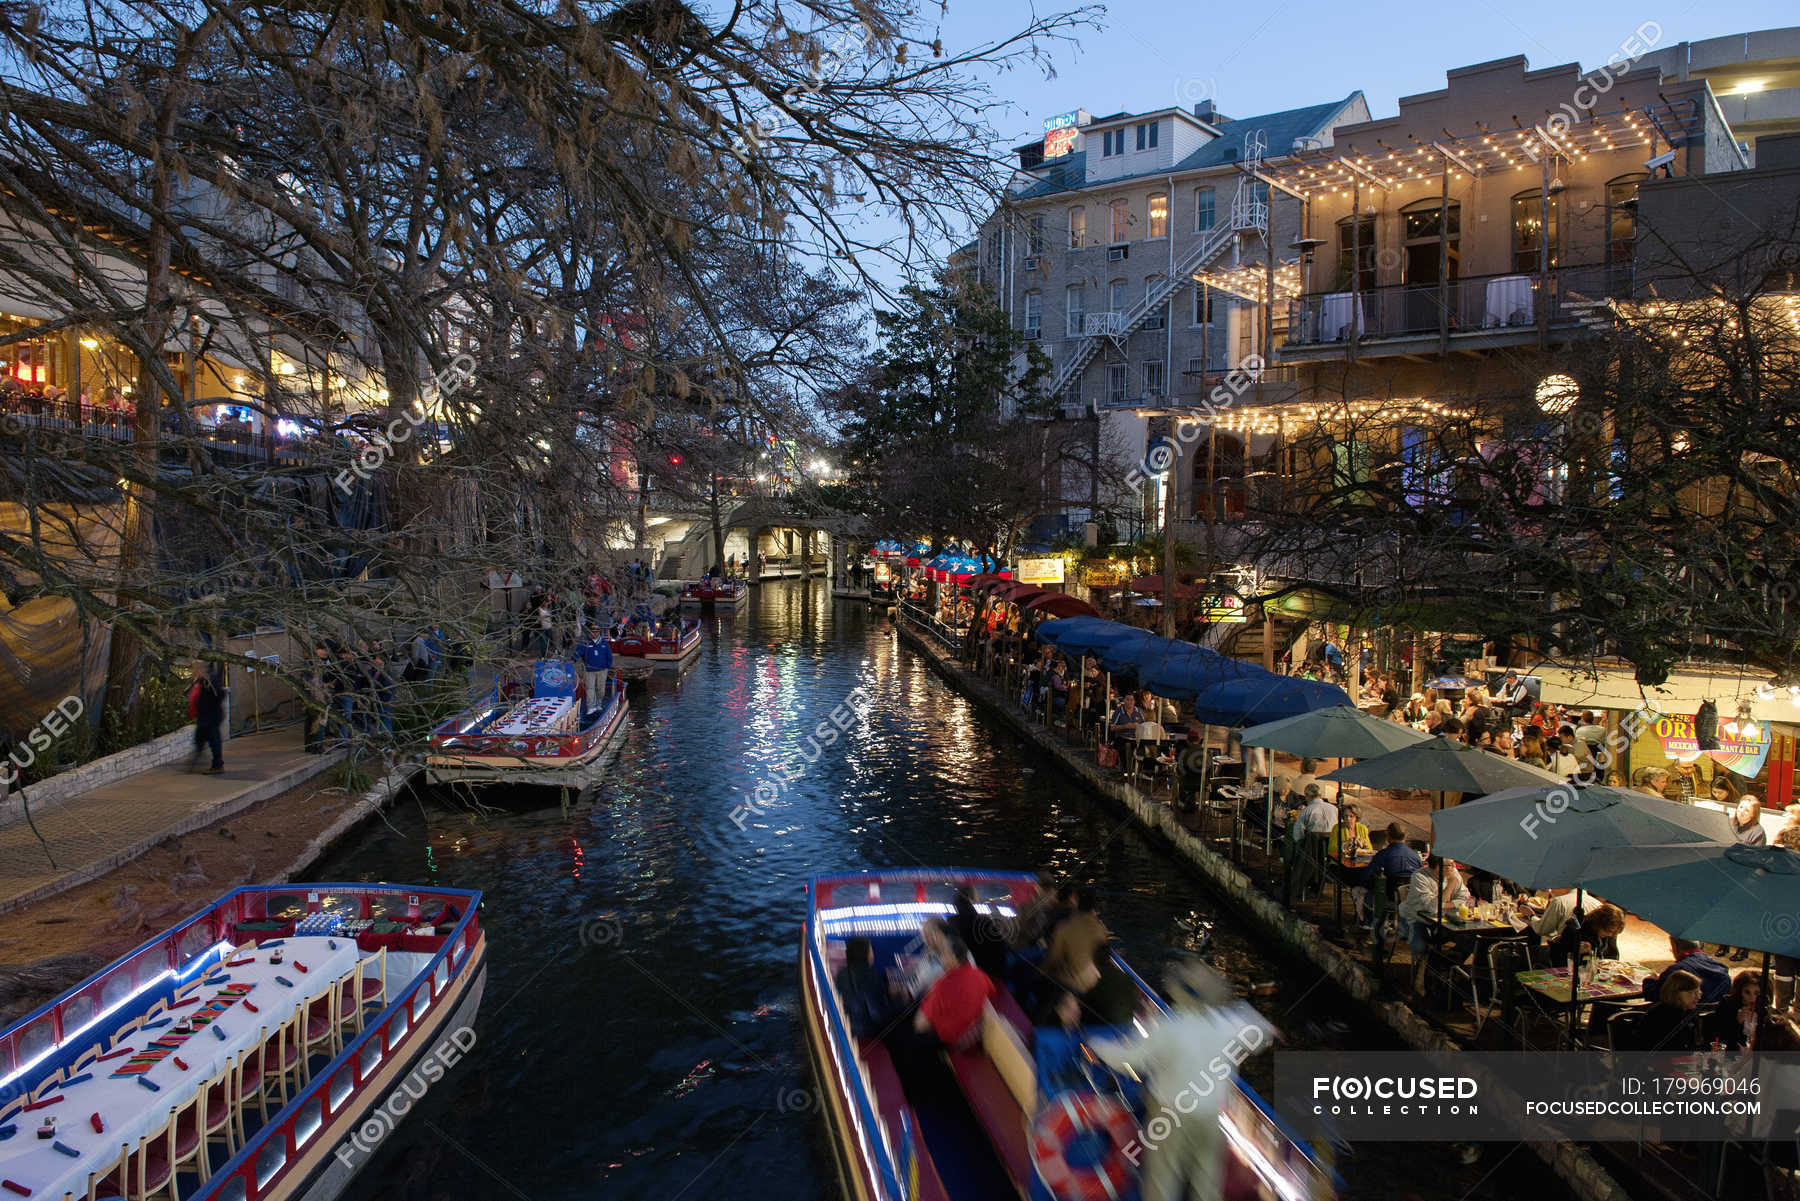 The San Antonio River Walk in San Antonio, Texas, USA — tourism